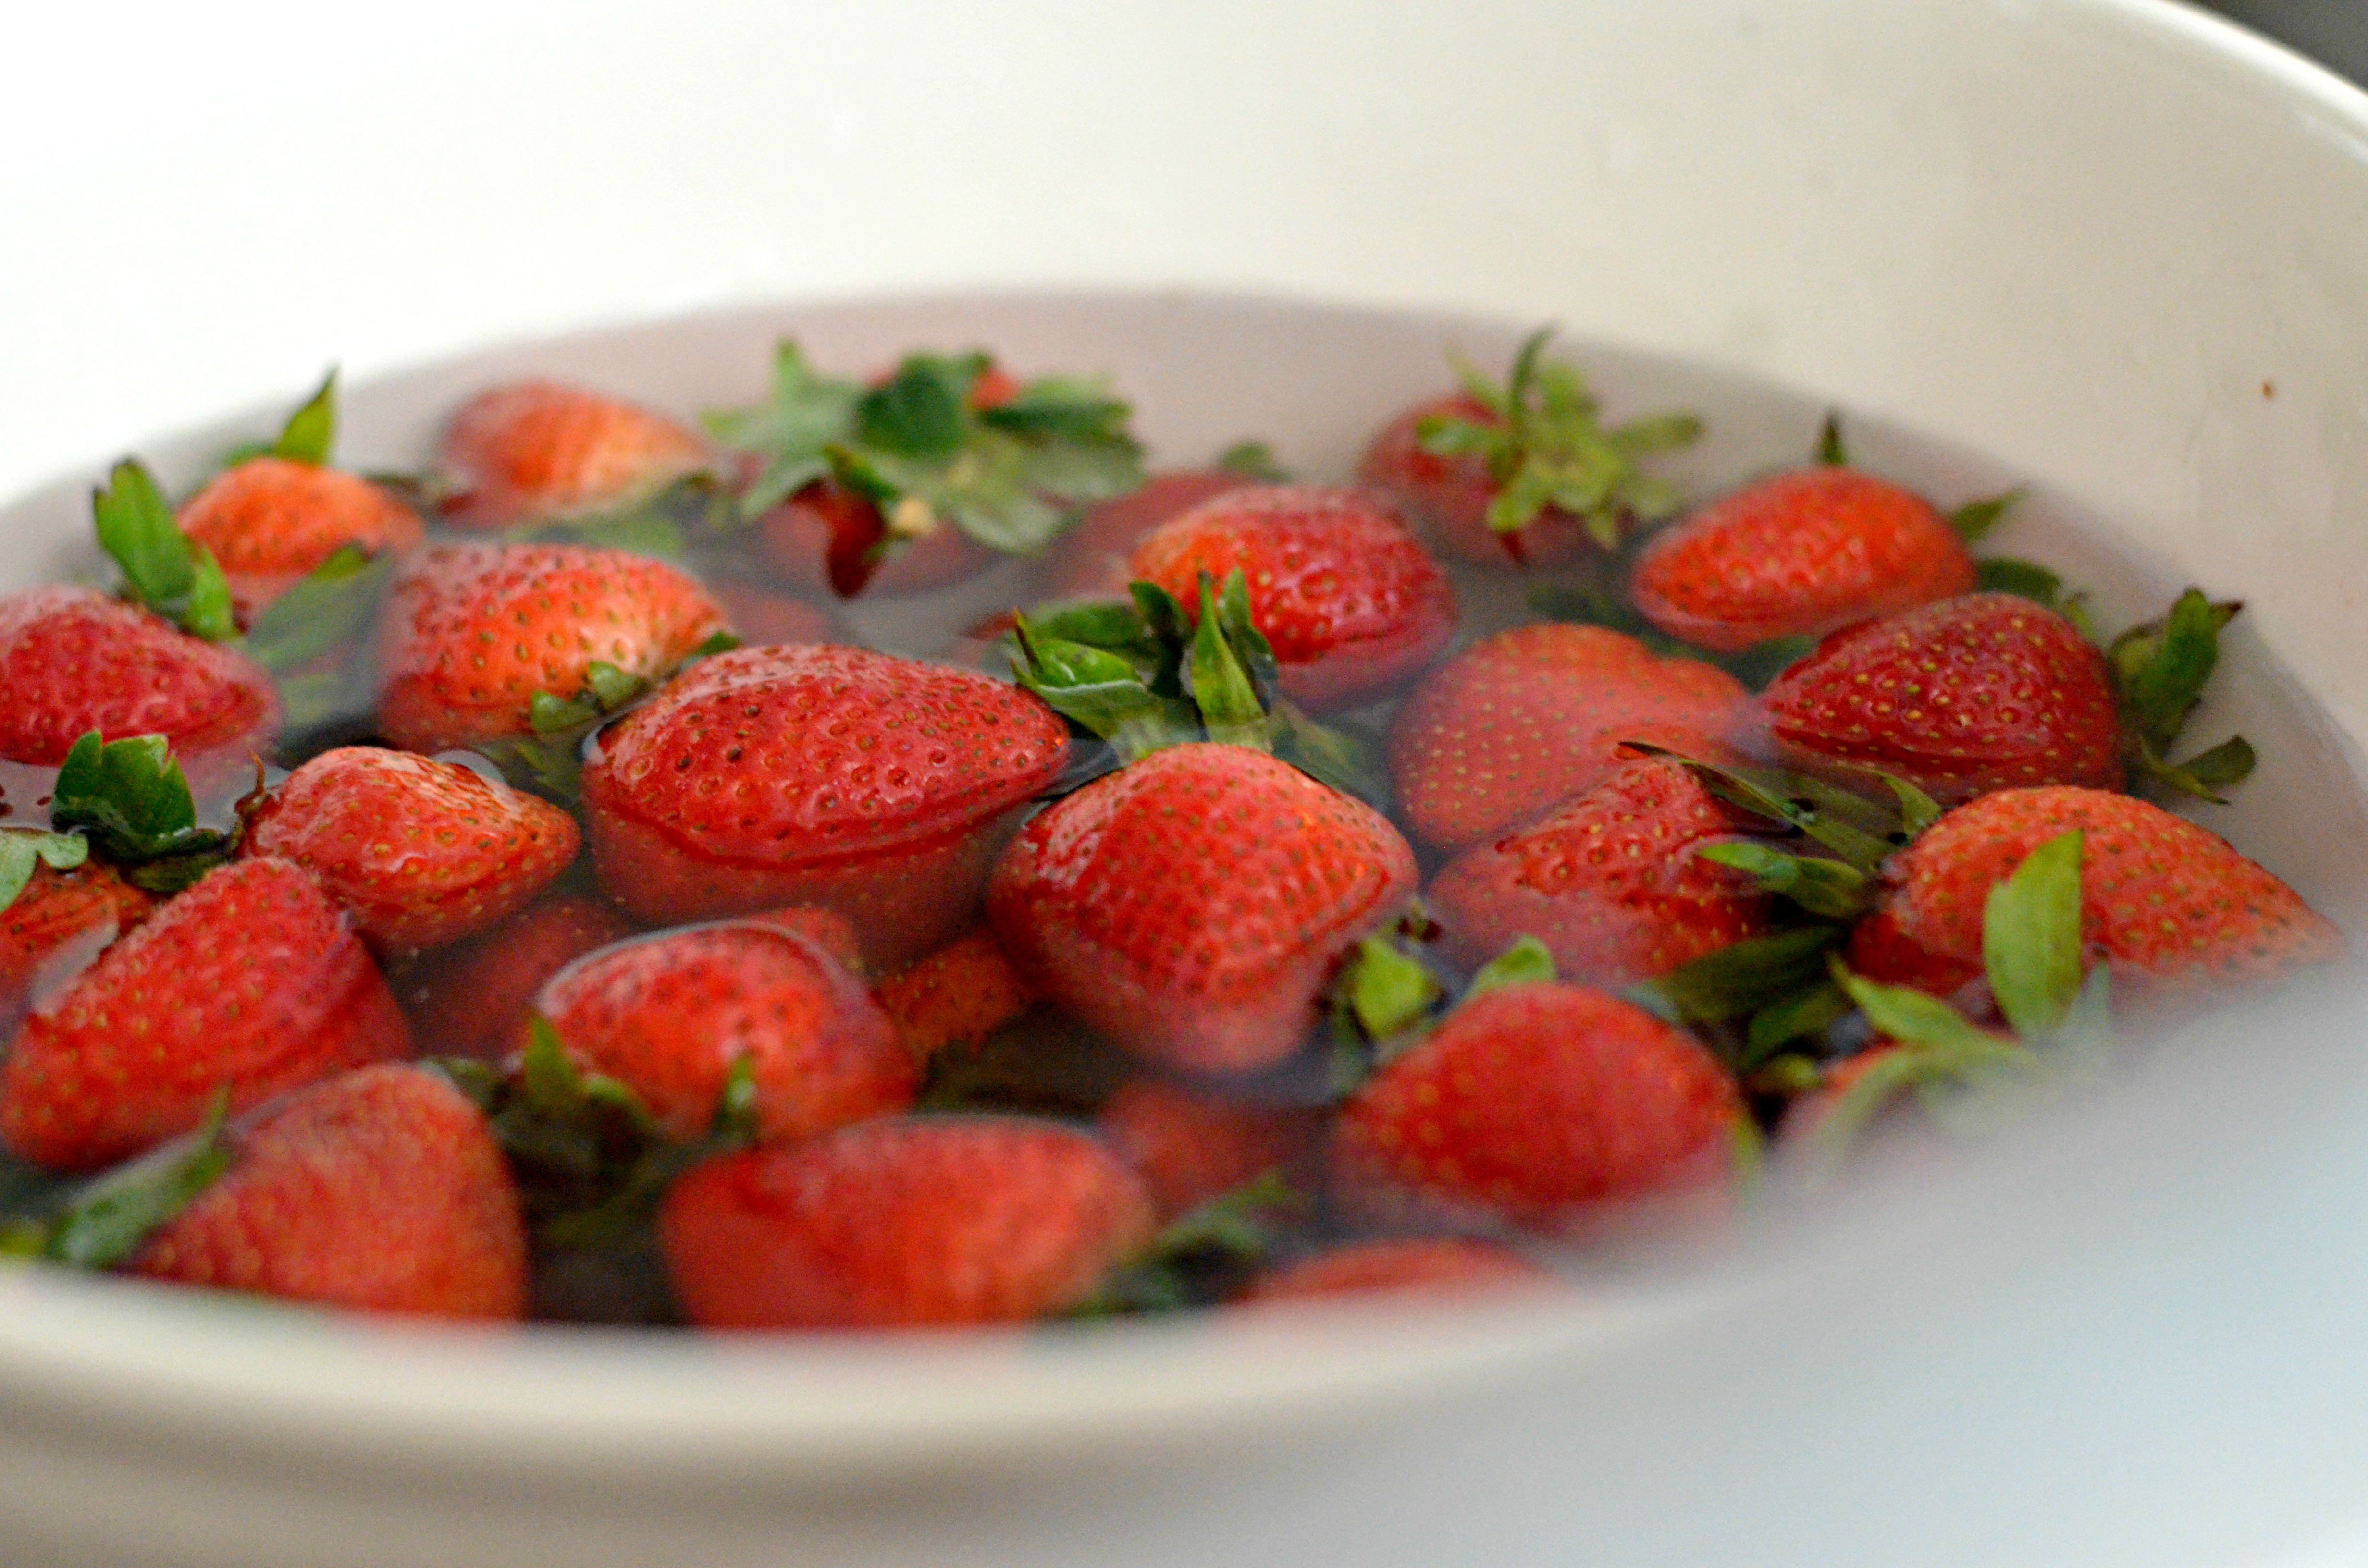 strawberries soaking in vinegar